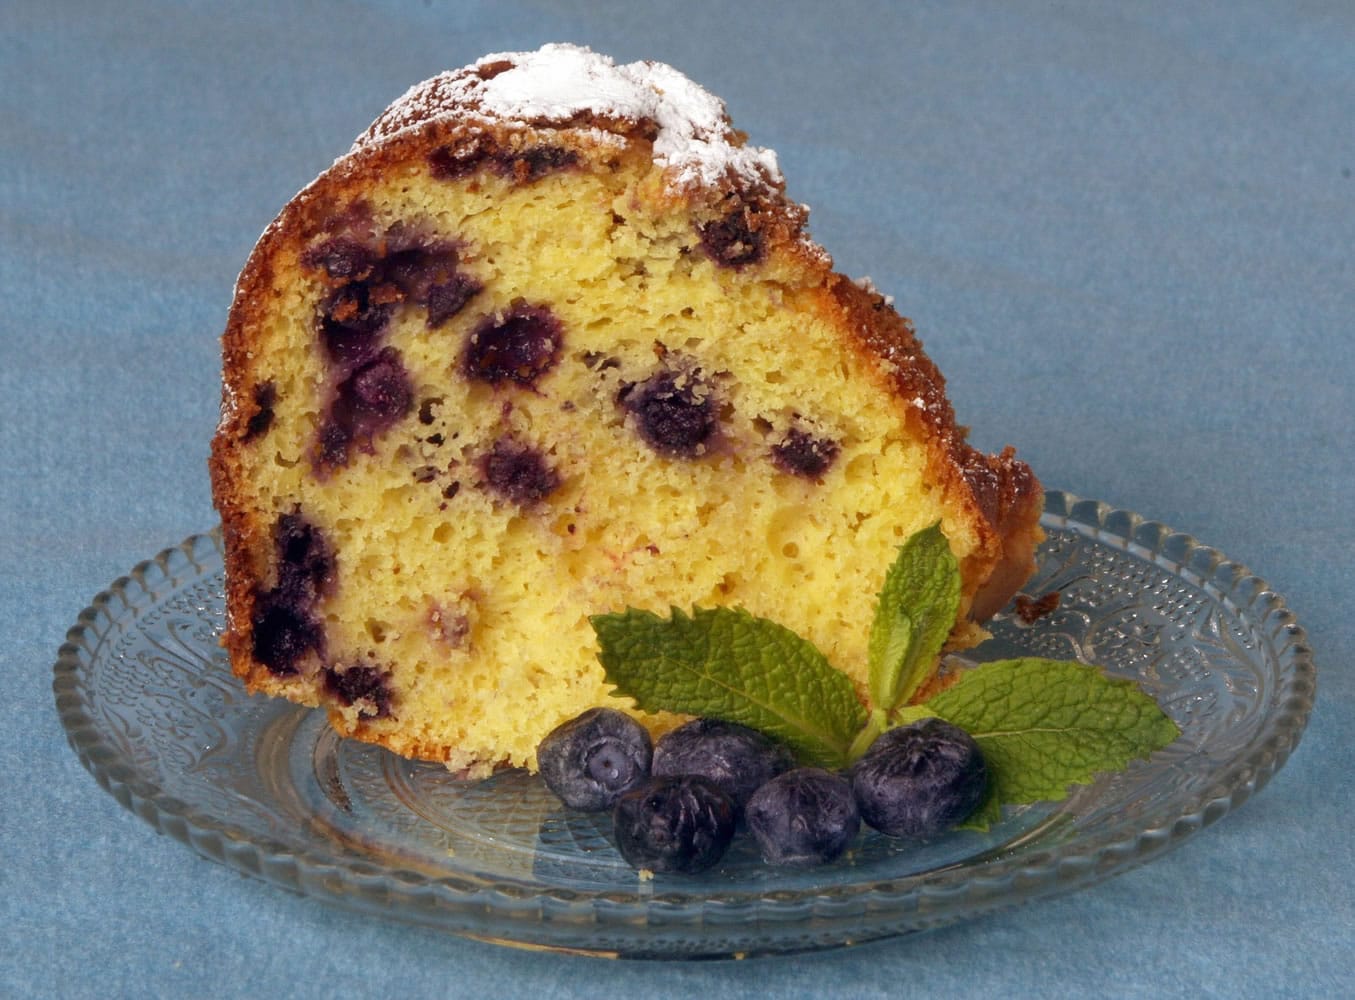 Lemon Blueberry Bundt cake makes a tasty, light treat that's great for the summer months.